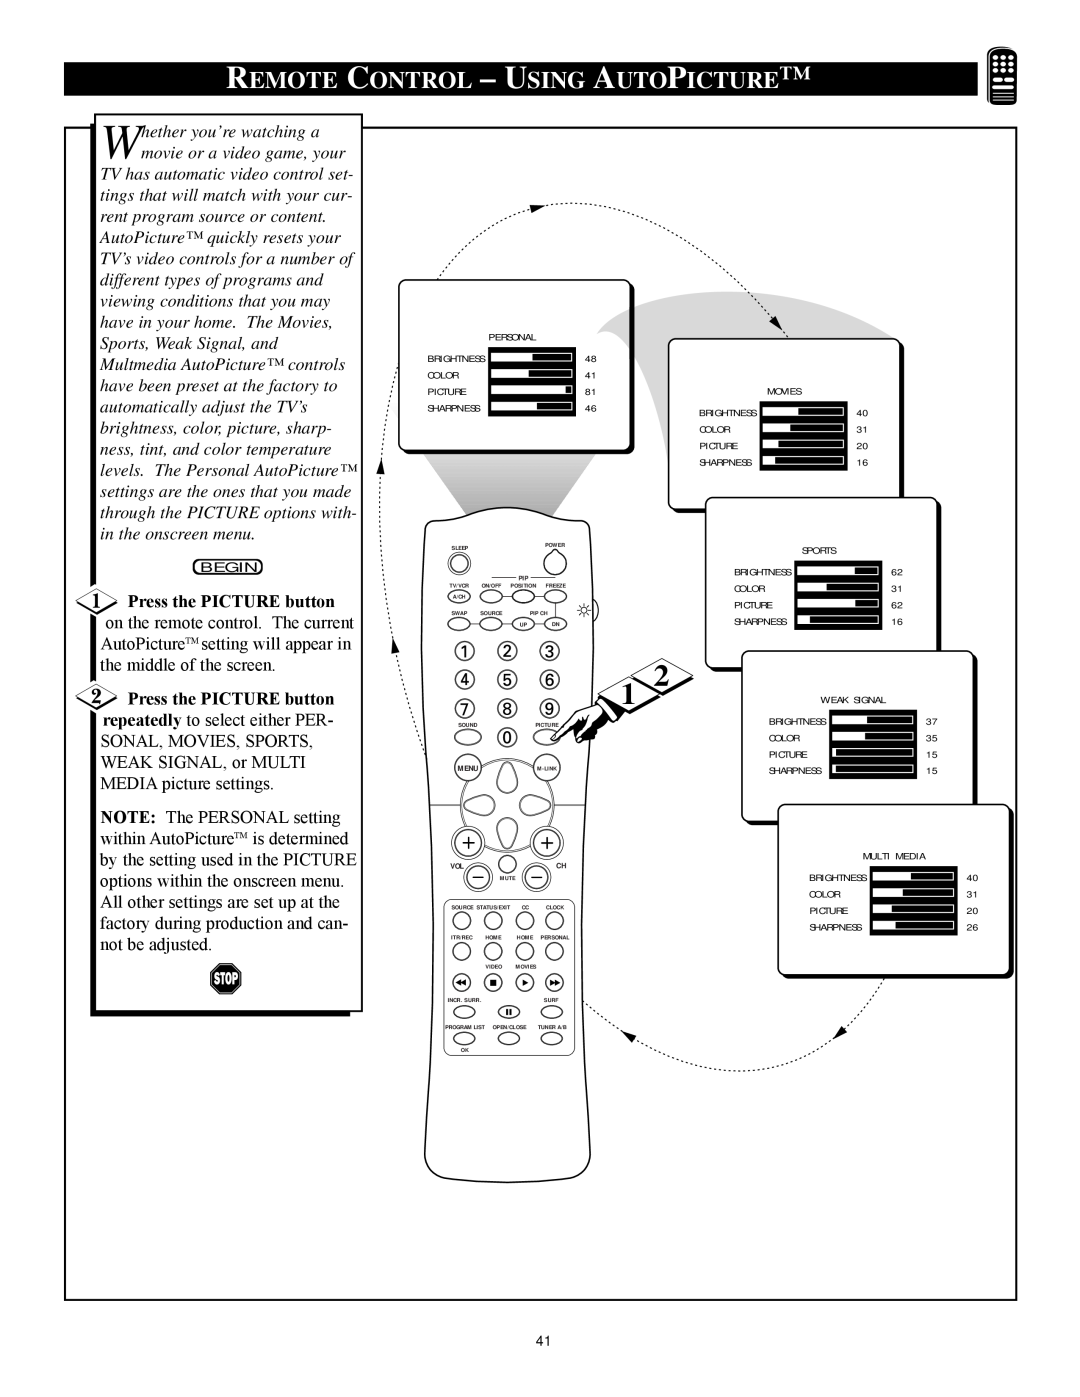 Philips 27PT71B1 manual Remote Control - Using Autopicture, Press the PICTURE button 